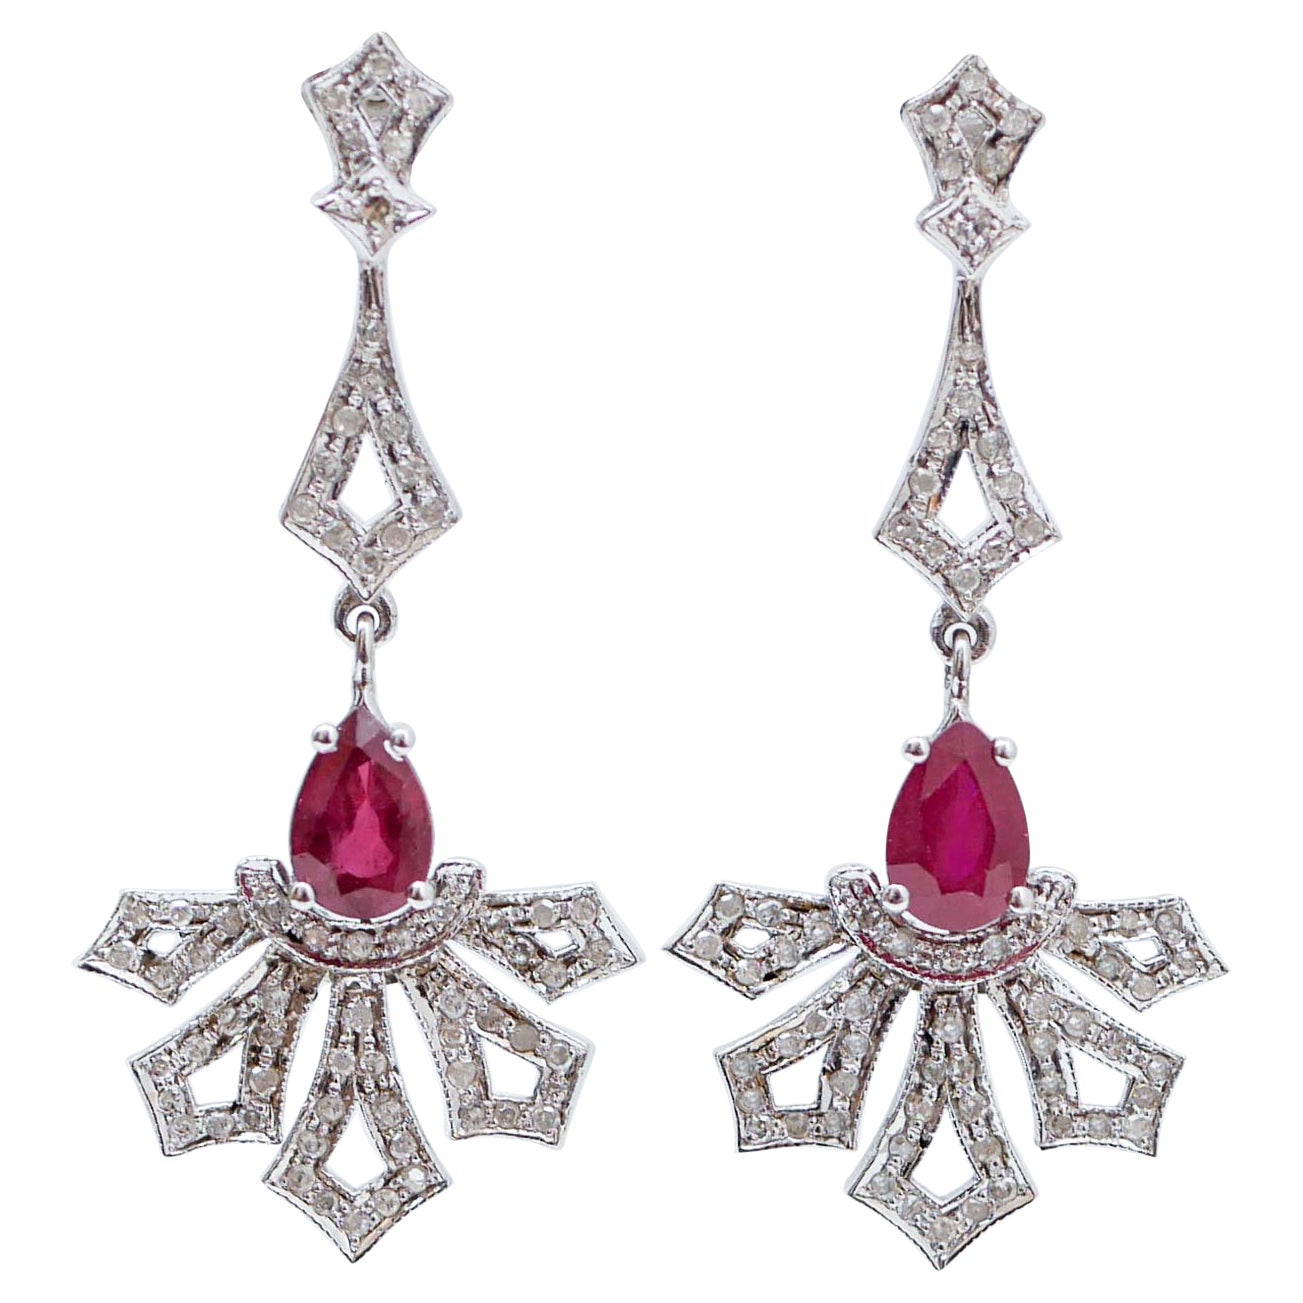 Rubies, Diamonds, 14 Karat White Gold Dangle Earrings. For Sale